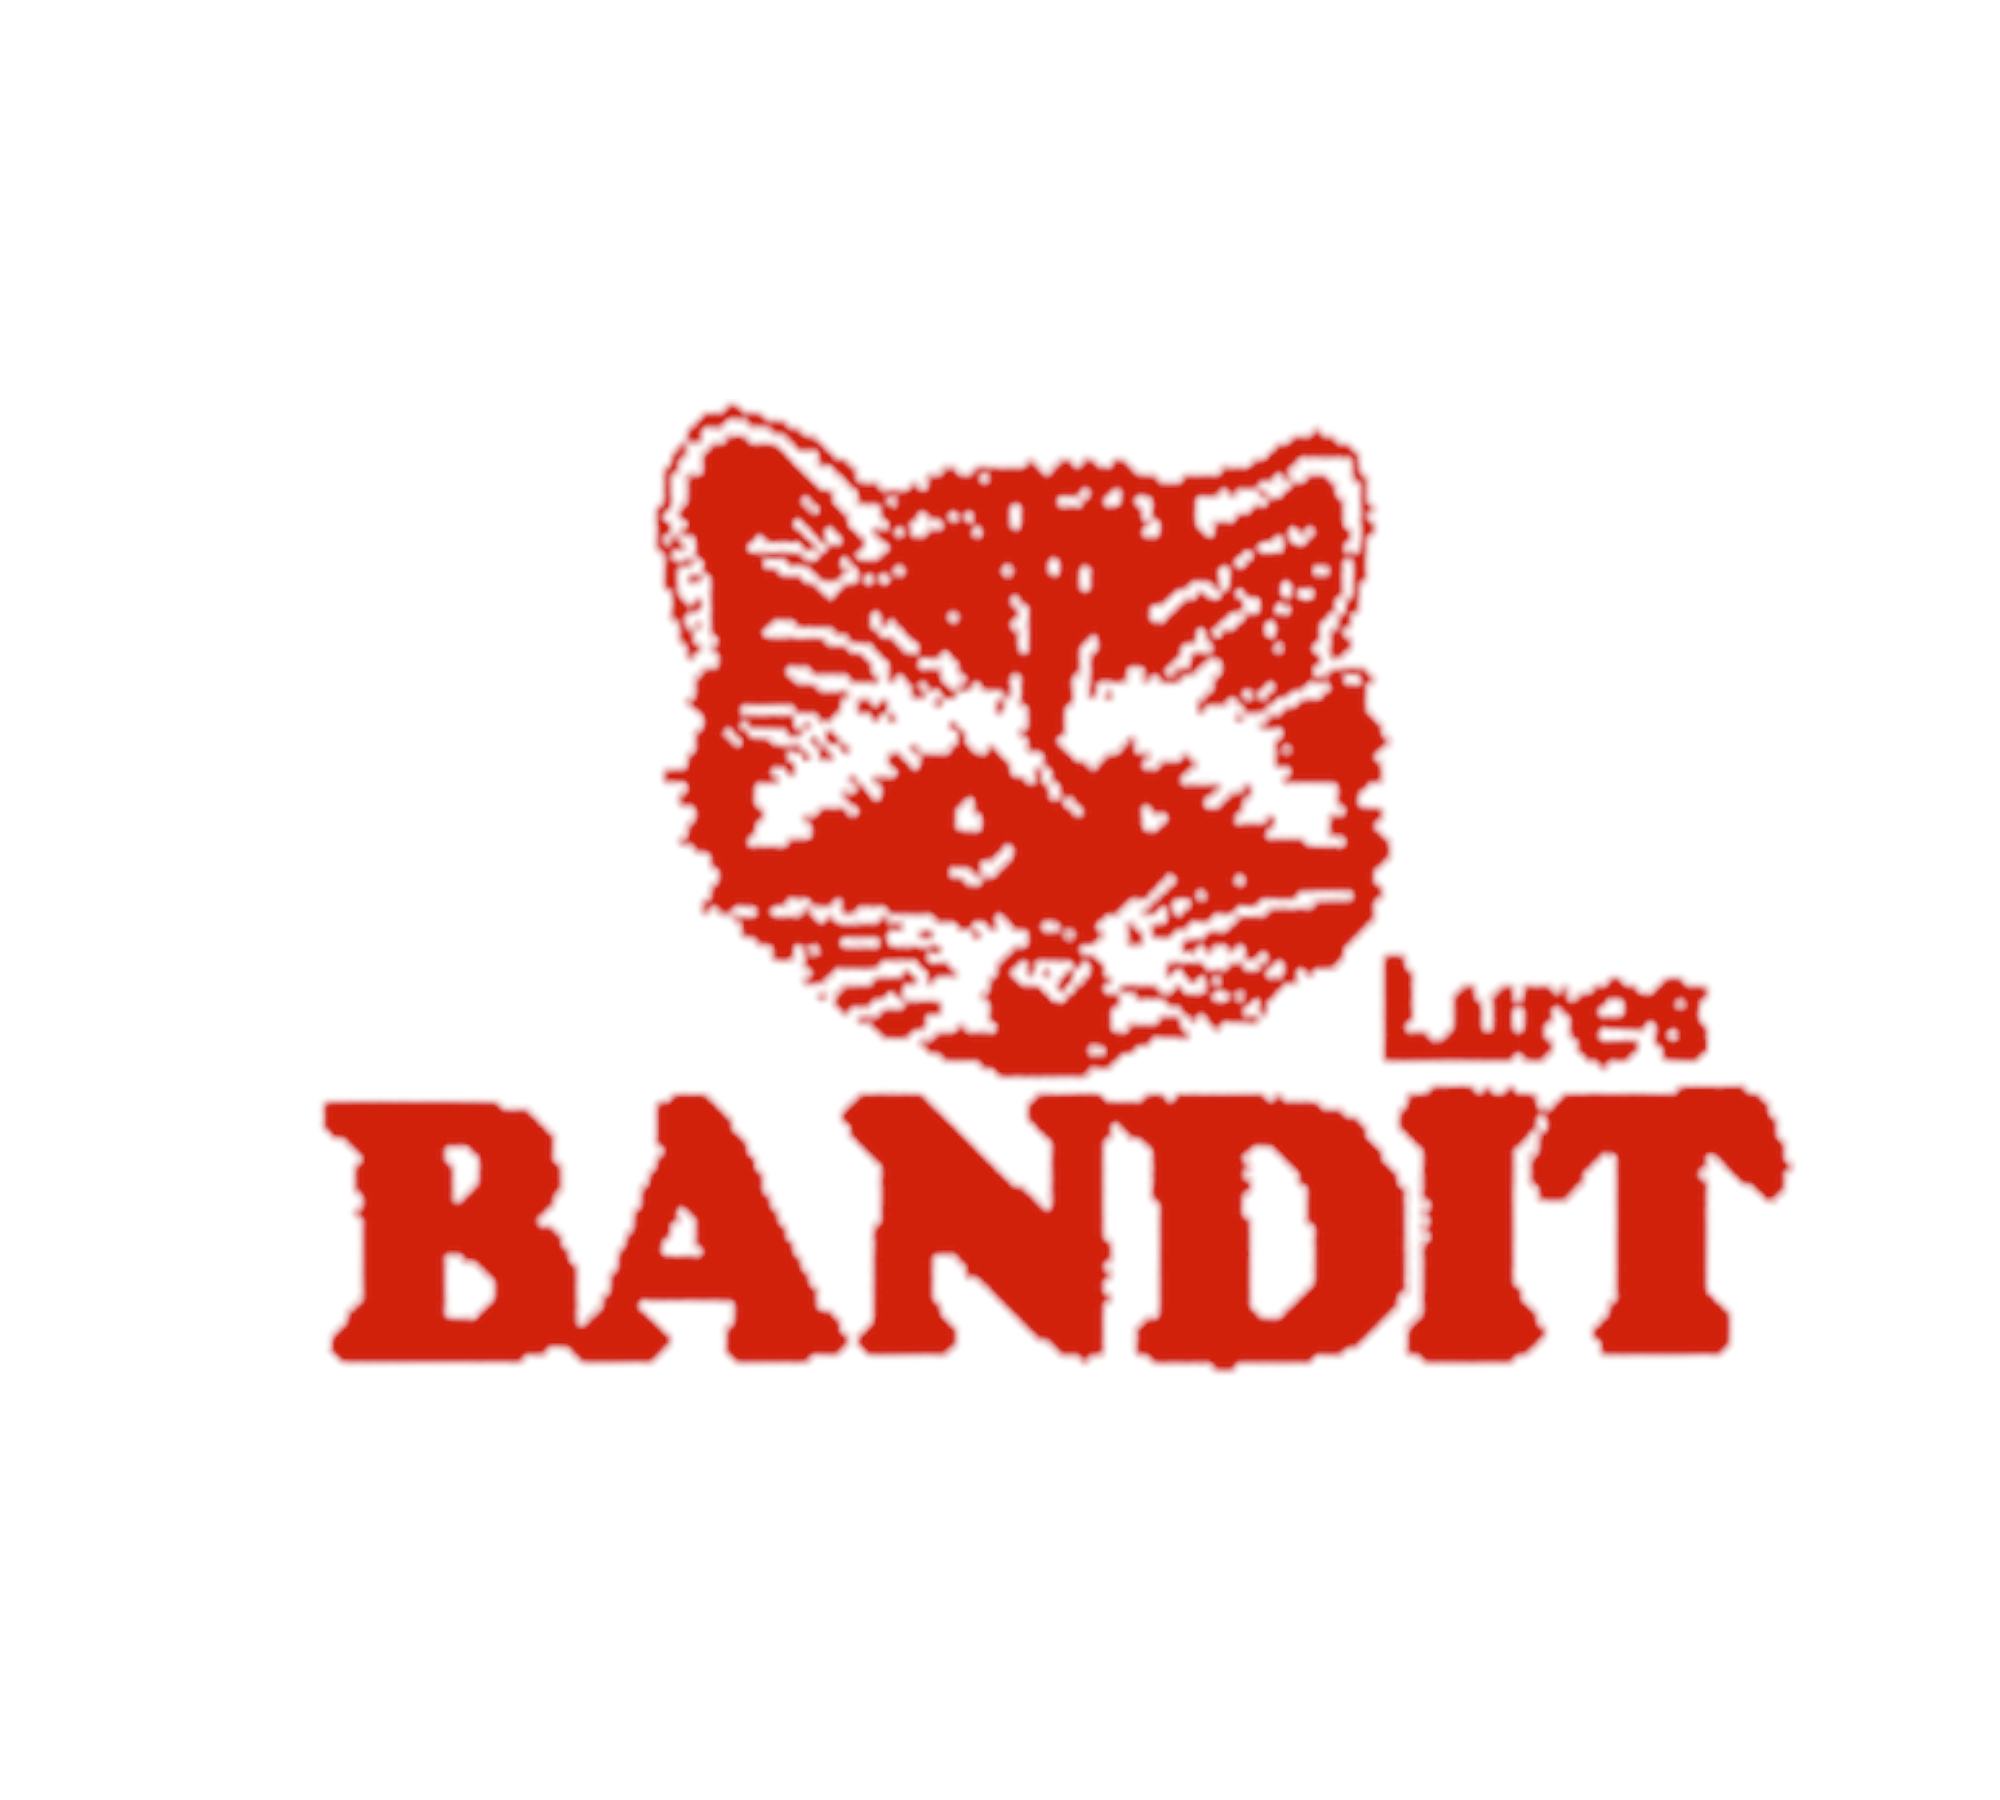 Bandit Lures. Vintage Crankbaits from Sardis, Mississippi – Tagged